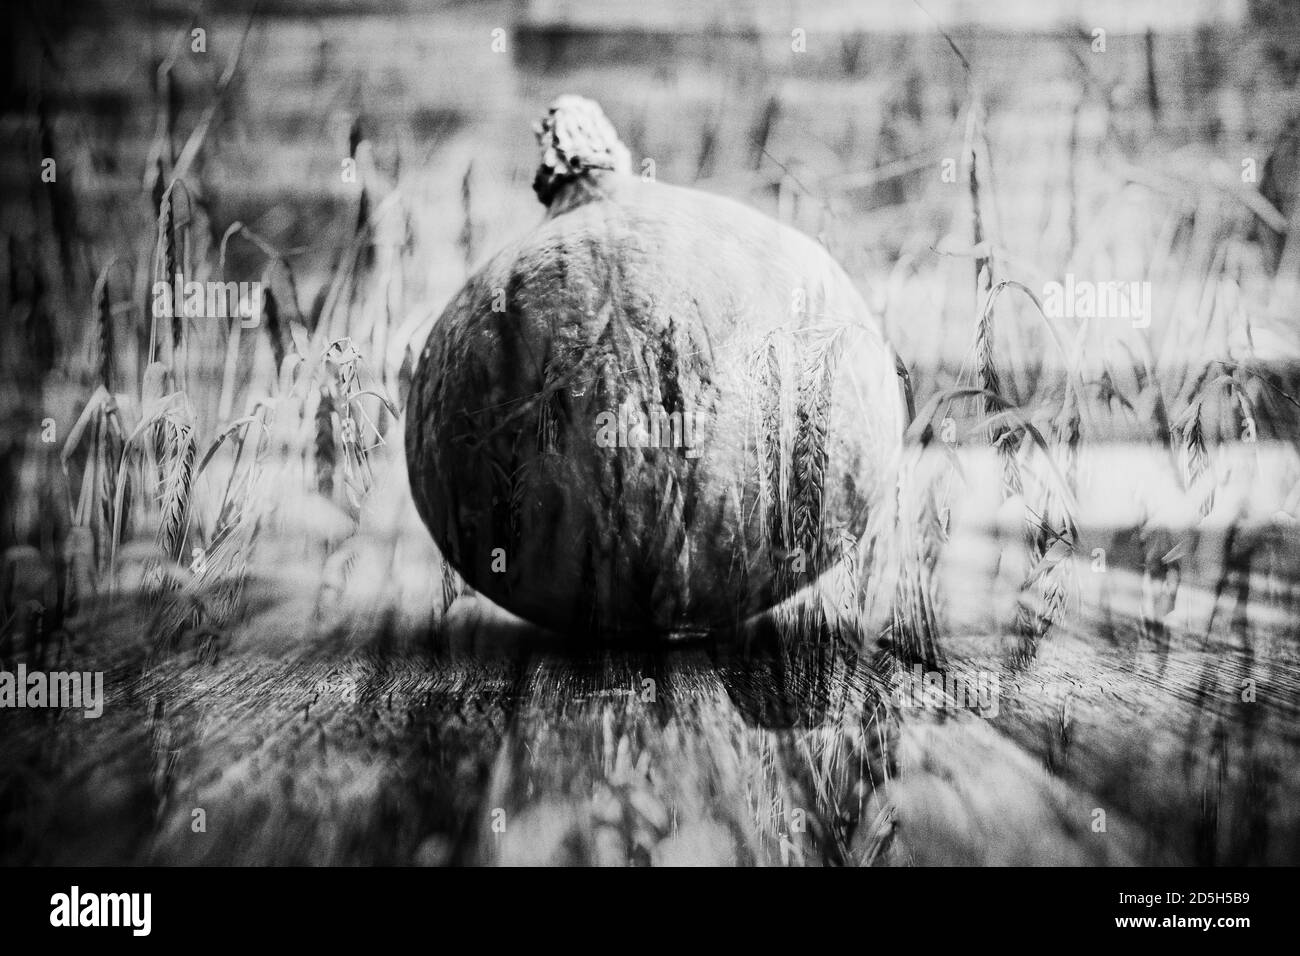 Hokaido pumpkin on wooden table for Thanksgiving Stock Photo